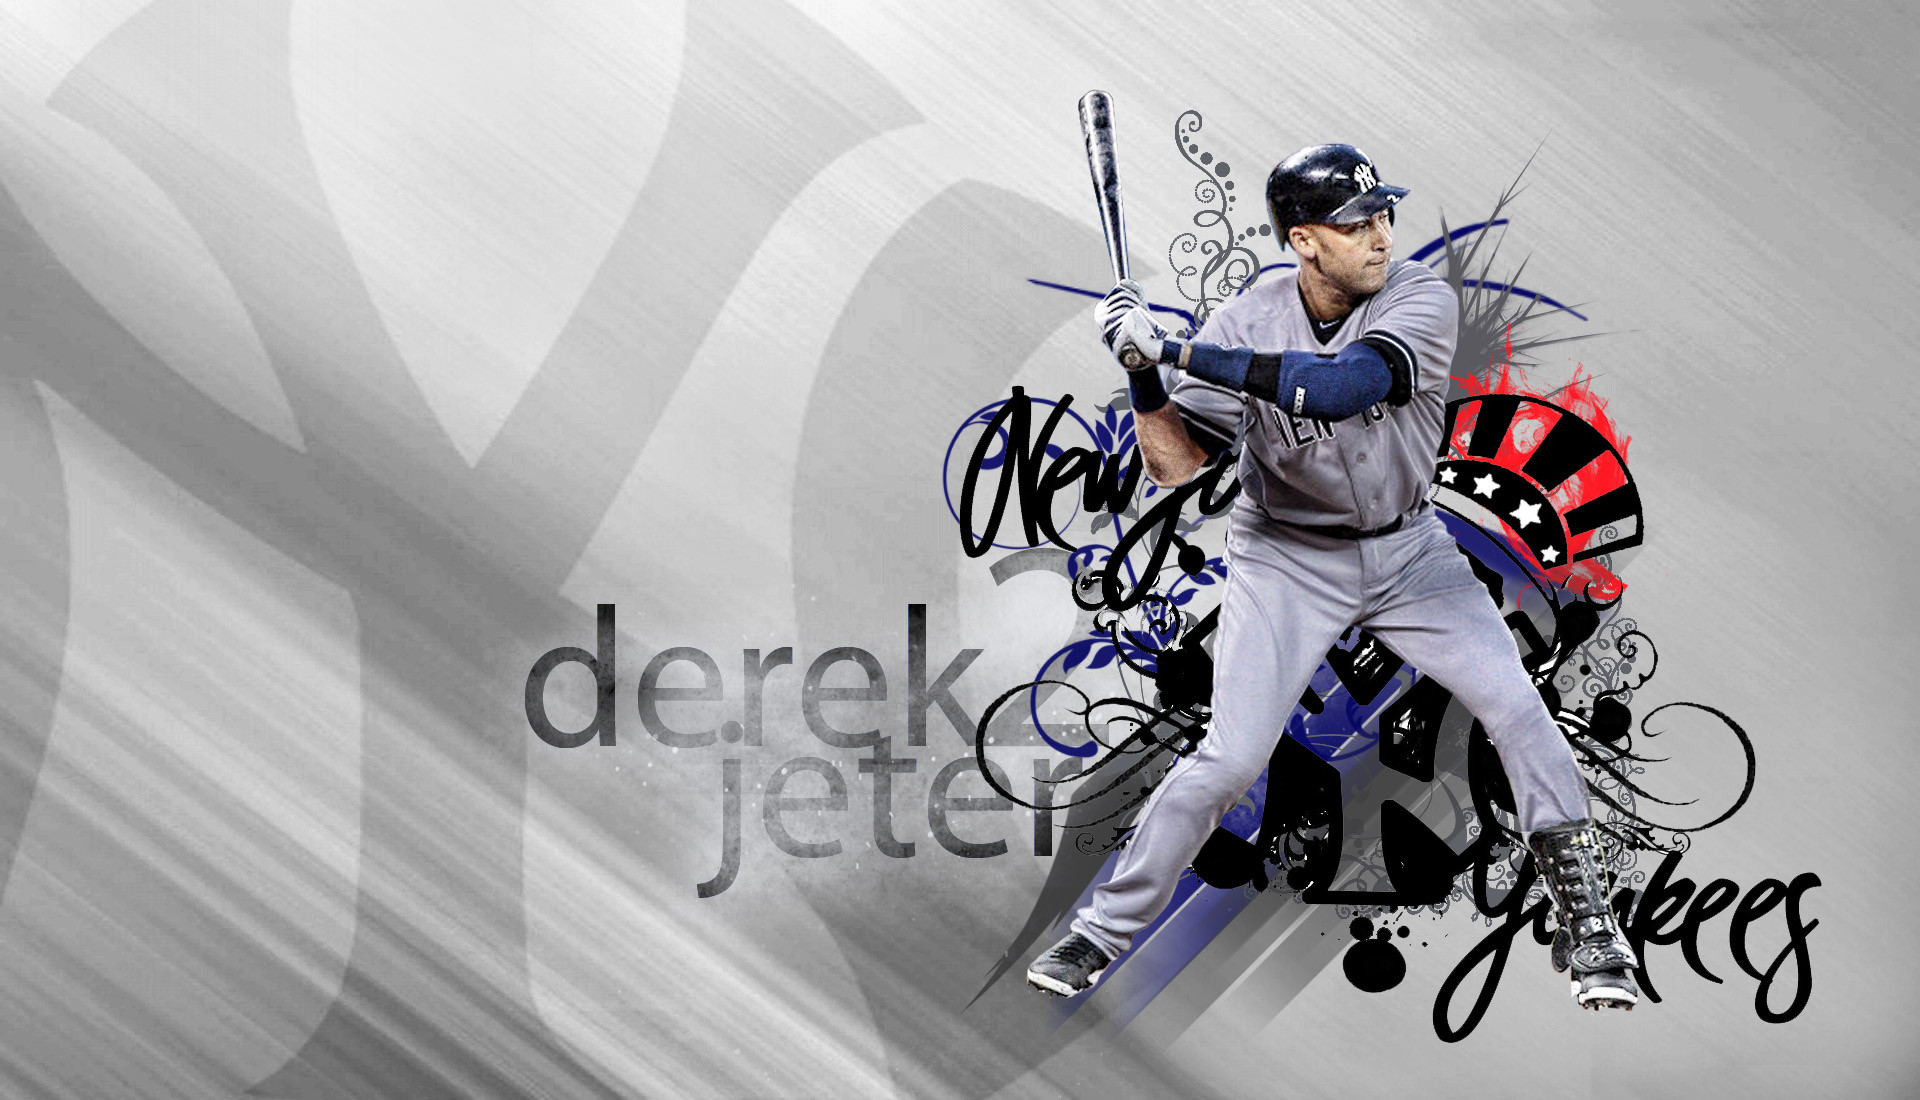 Derek Jeter HD Wallpapers and Backgrounds